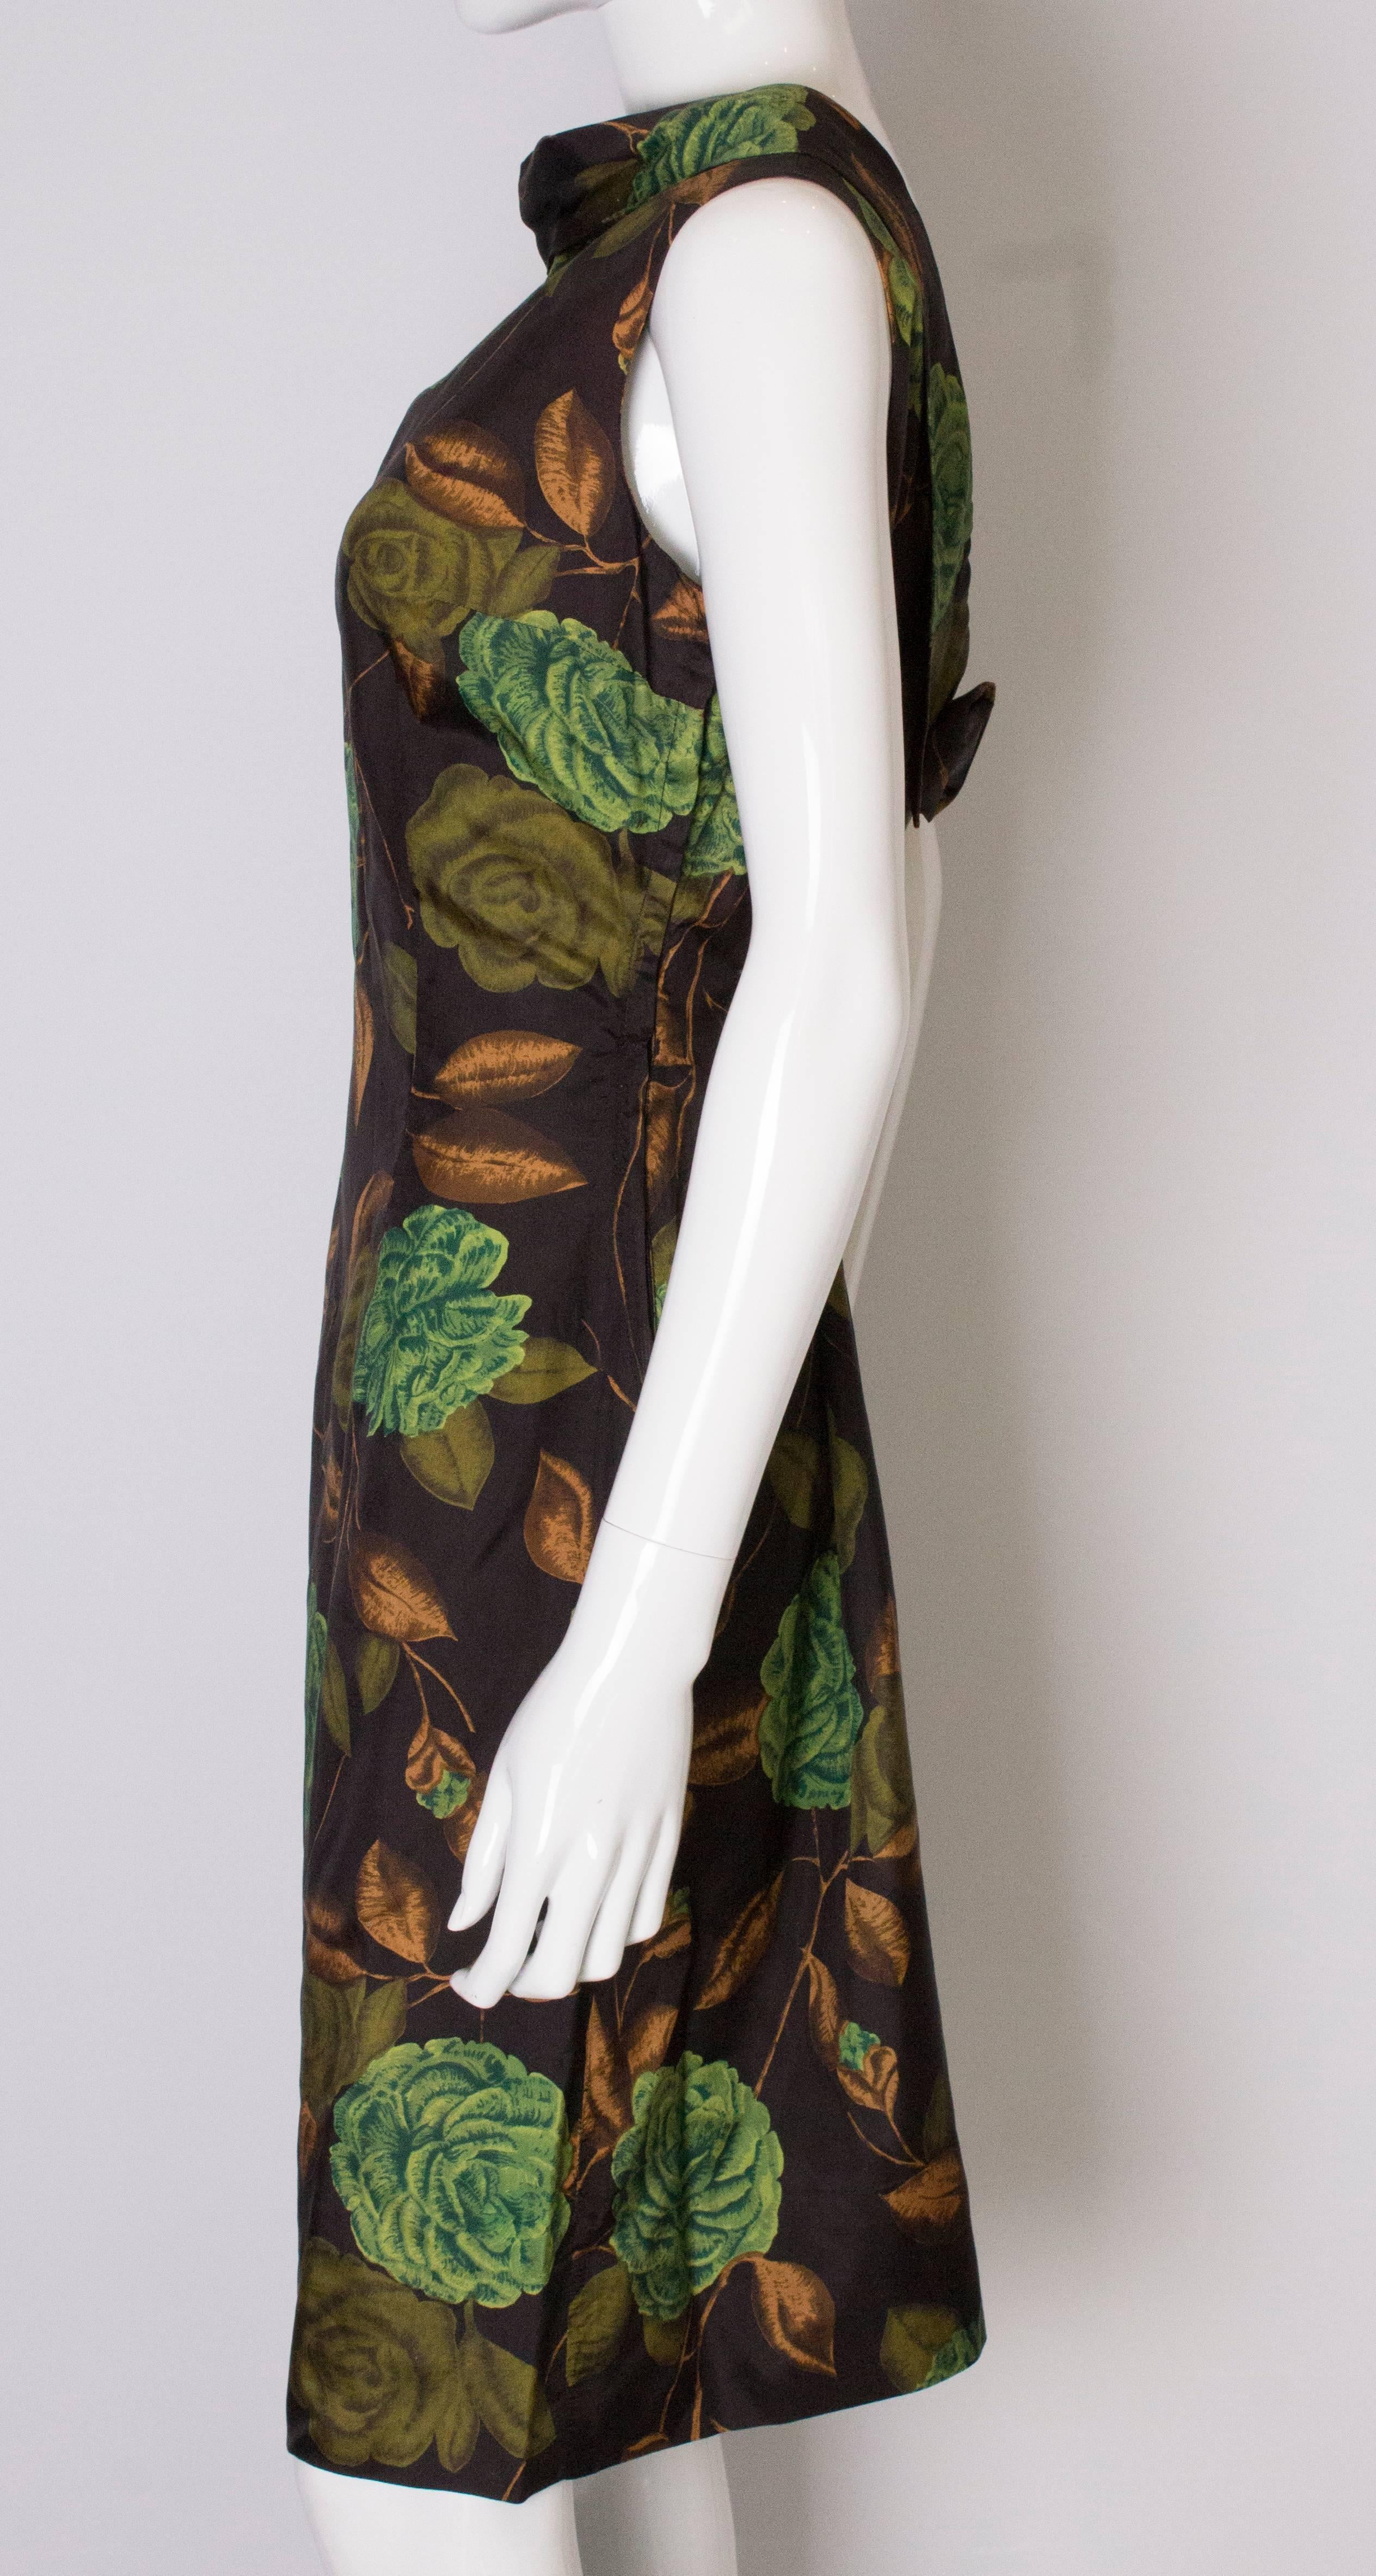 Women's or Men's A Vintage 1950s floral printed wiggle Shift dress